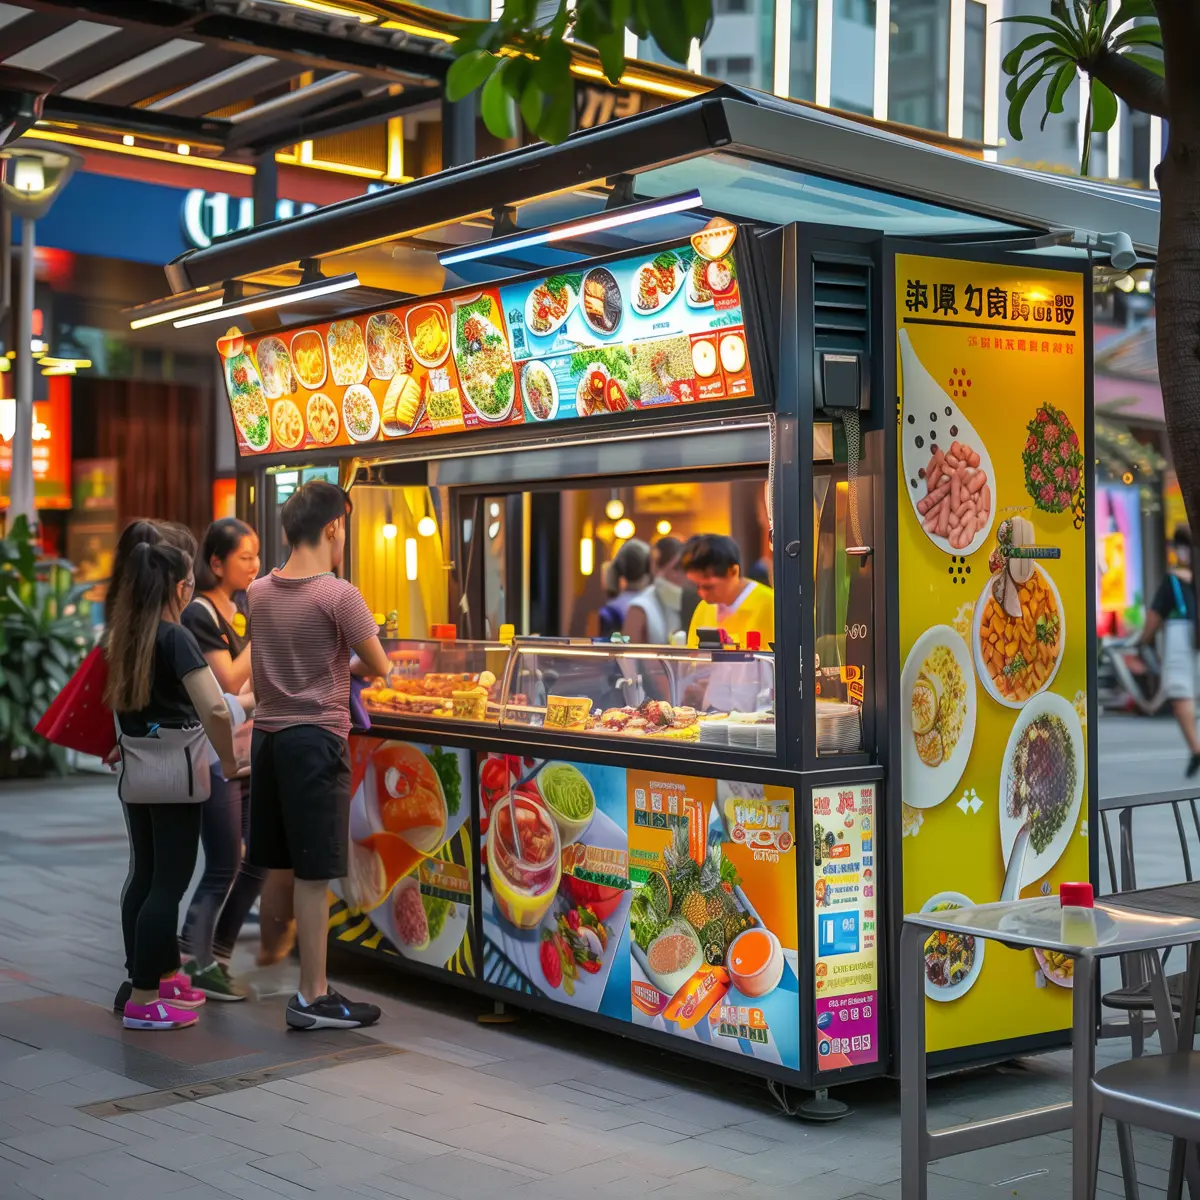 Food Kiosk Equipment Grant Proposal Concepts